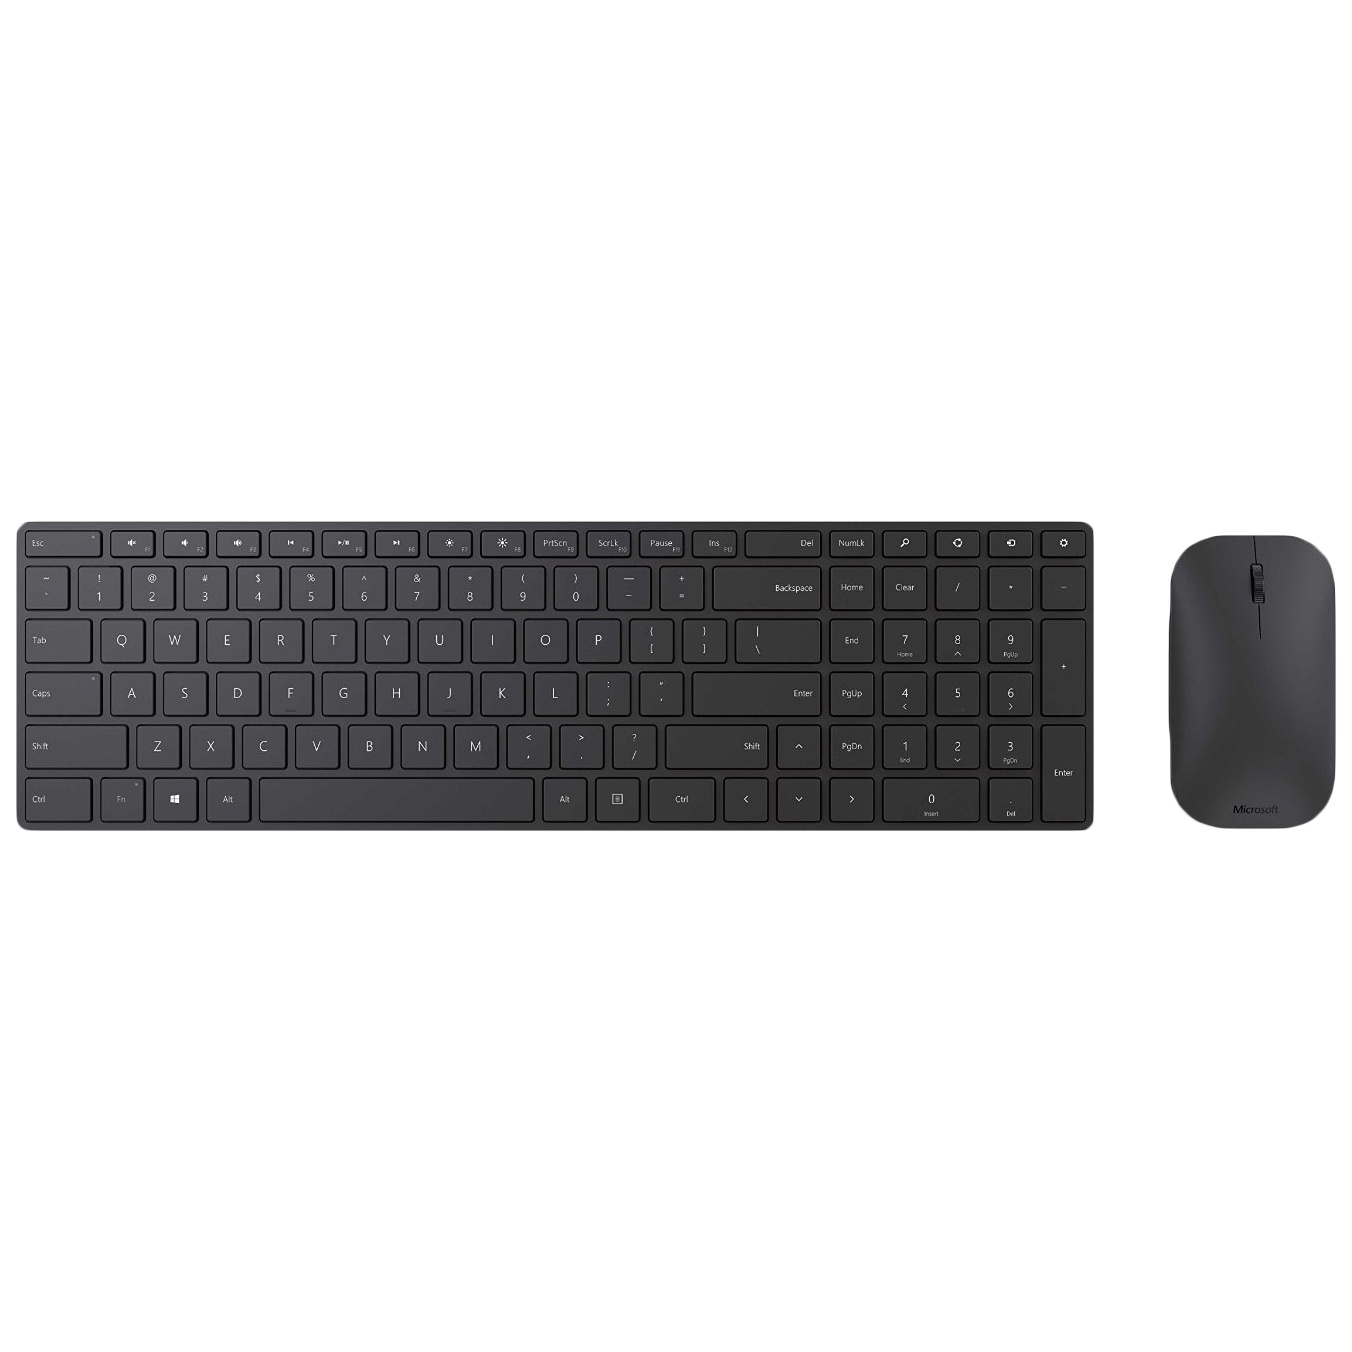 Комплект клавиатура+мышь Microsoft Designer Black (7N9-00018)